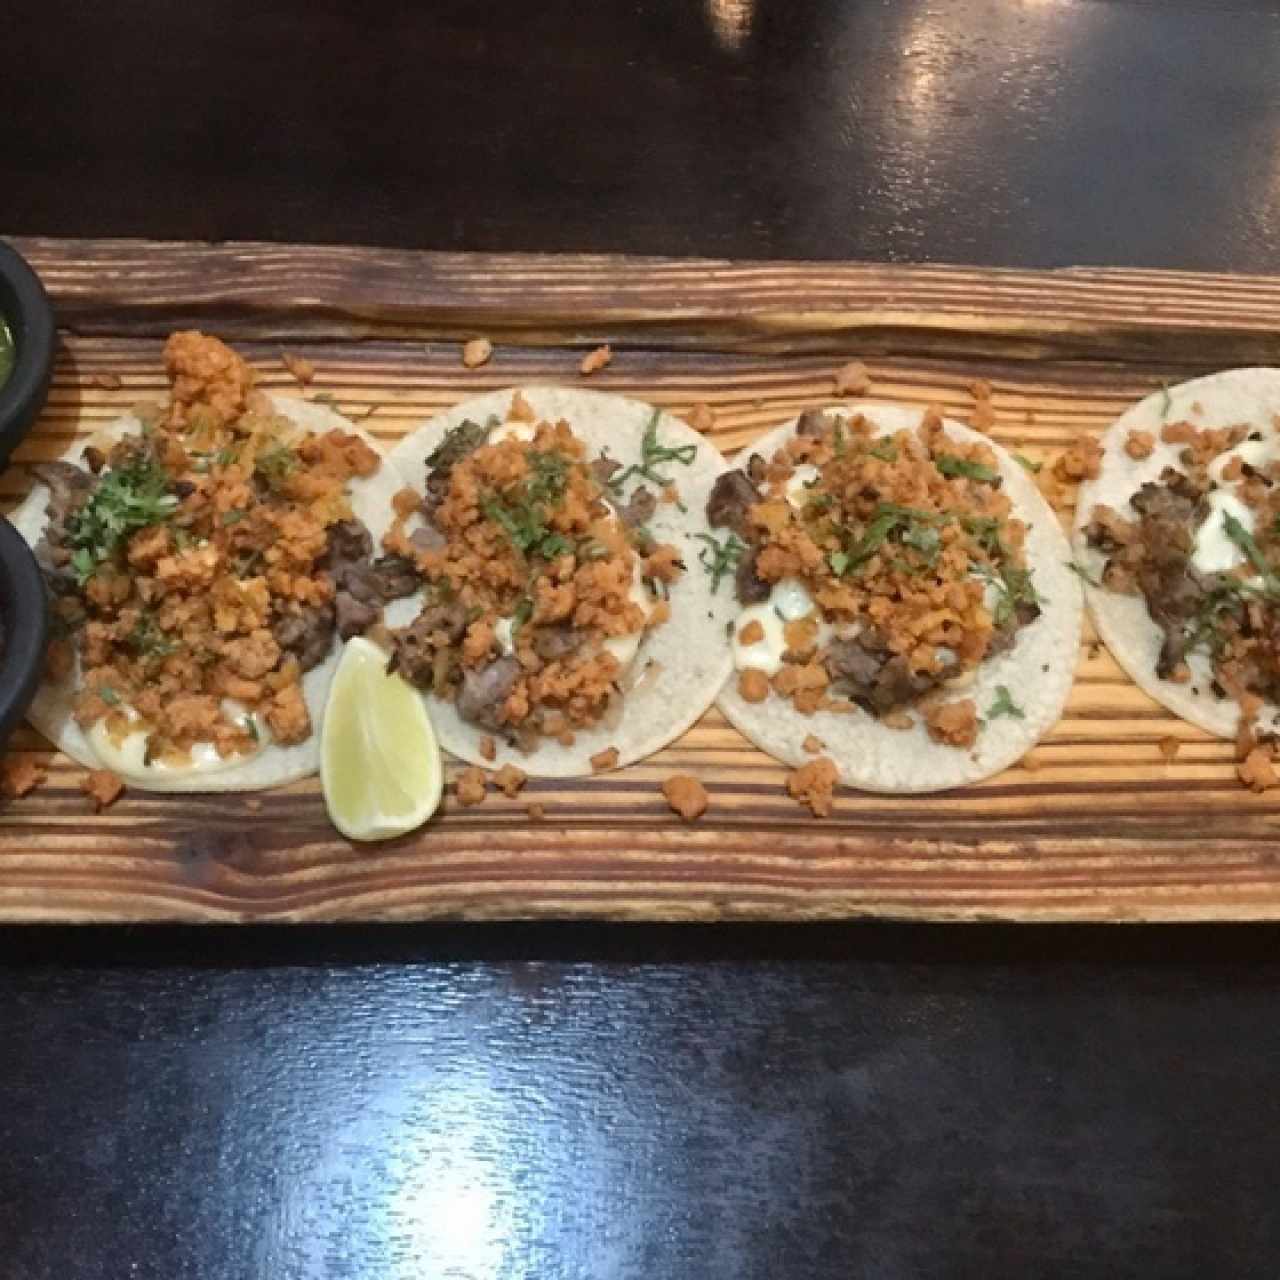 Tacos Campechanos